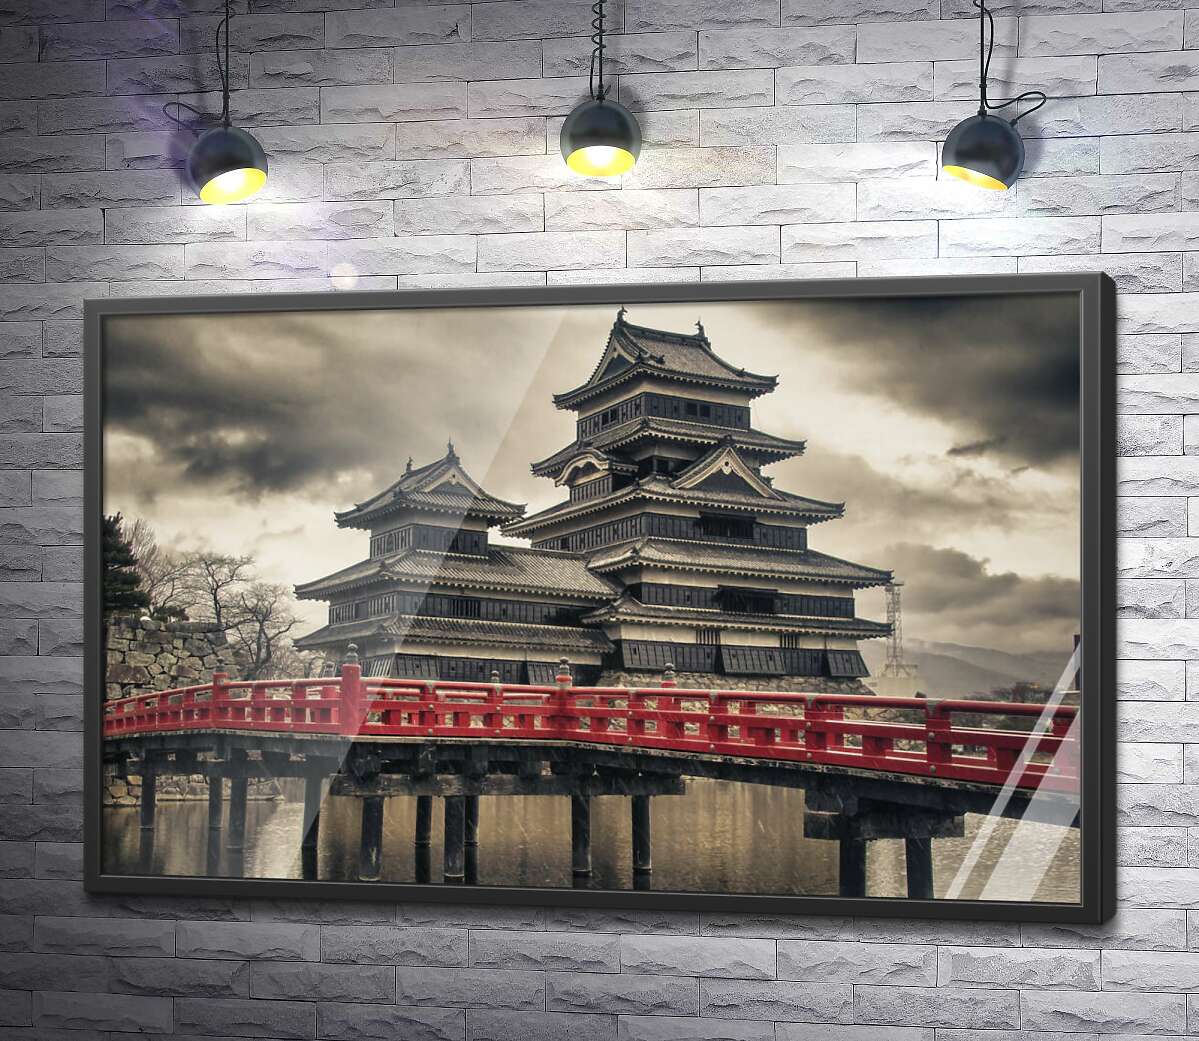 постер Дорога к японскому замку ворона – Мацумото (Matsumoto)